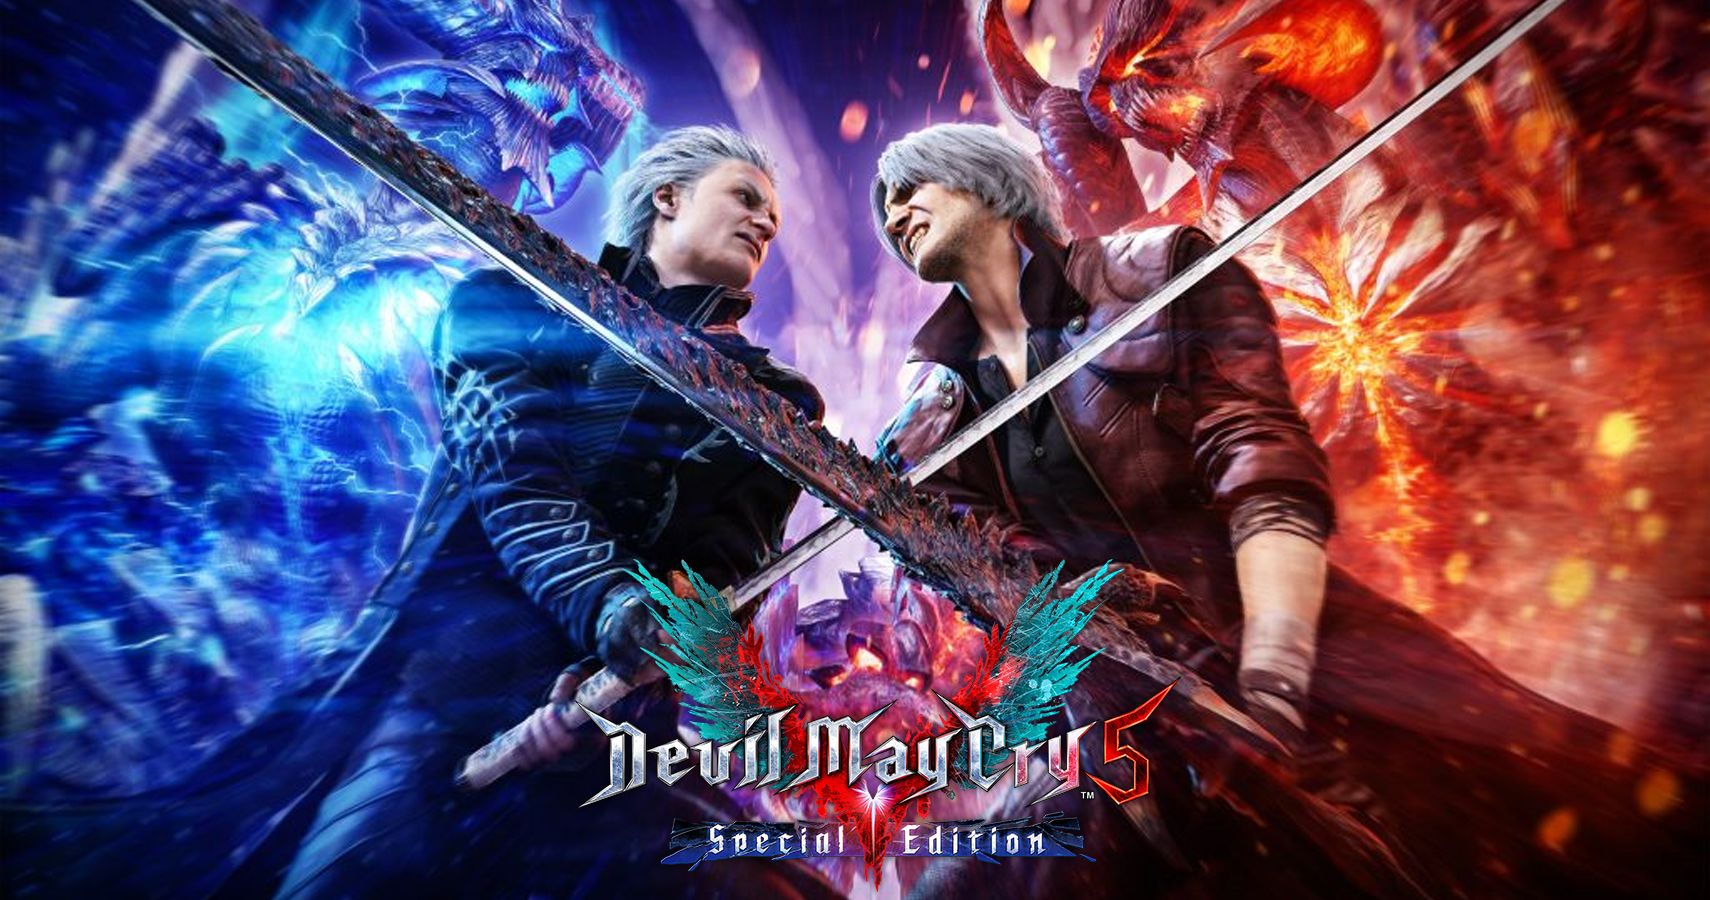 Devil May Cry 5 - Vergil Returns Cutscene (DMC5 2019) PS4 Pro 